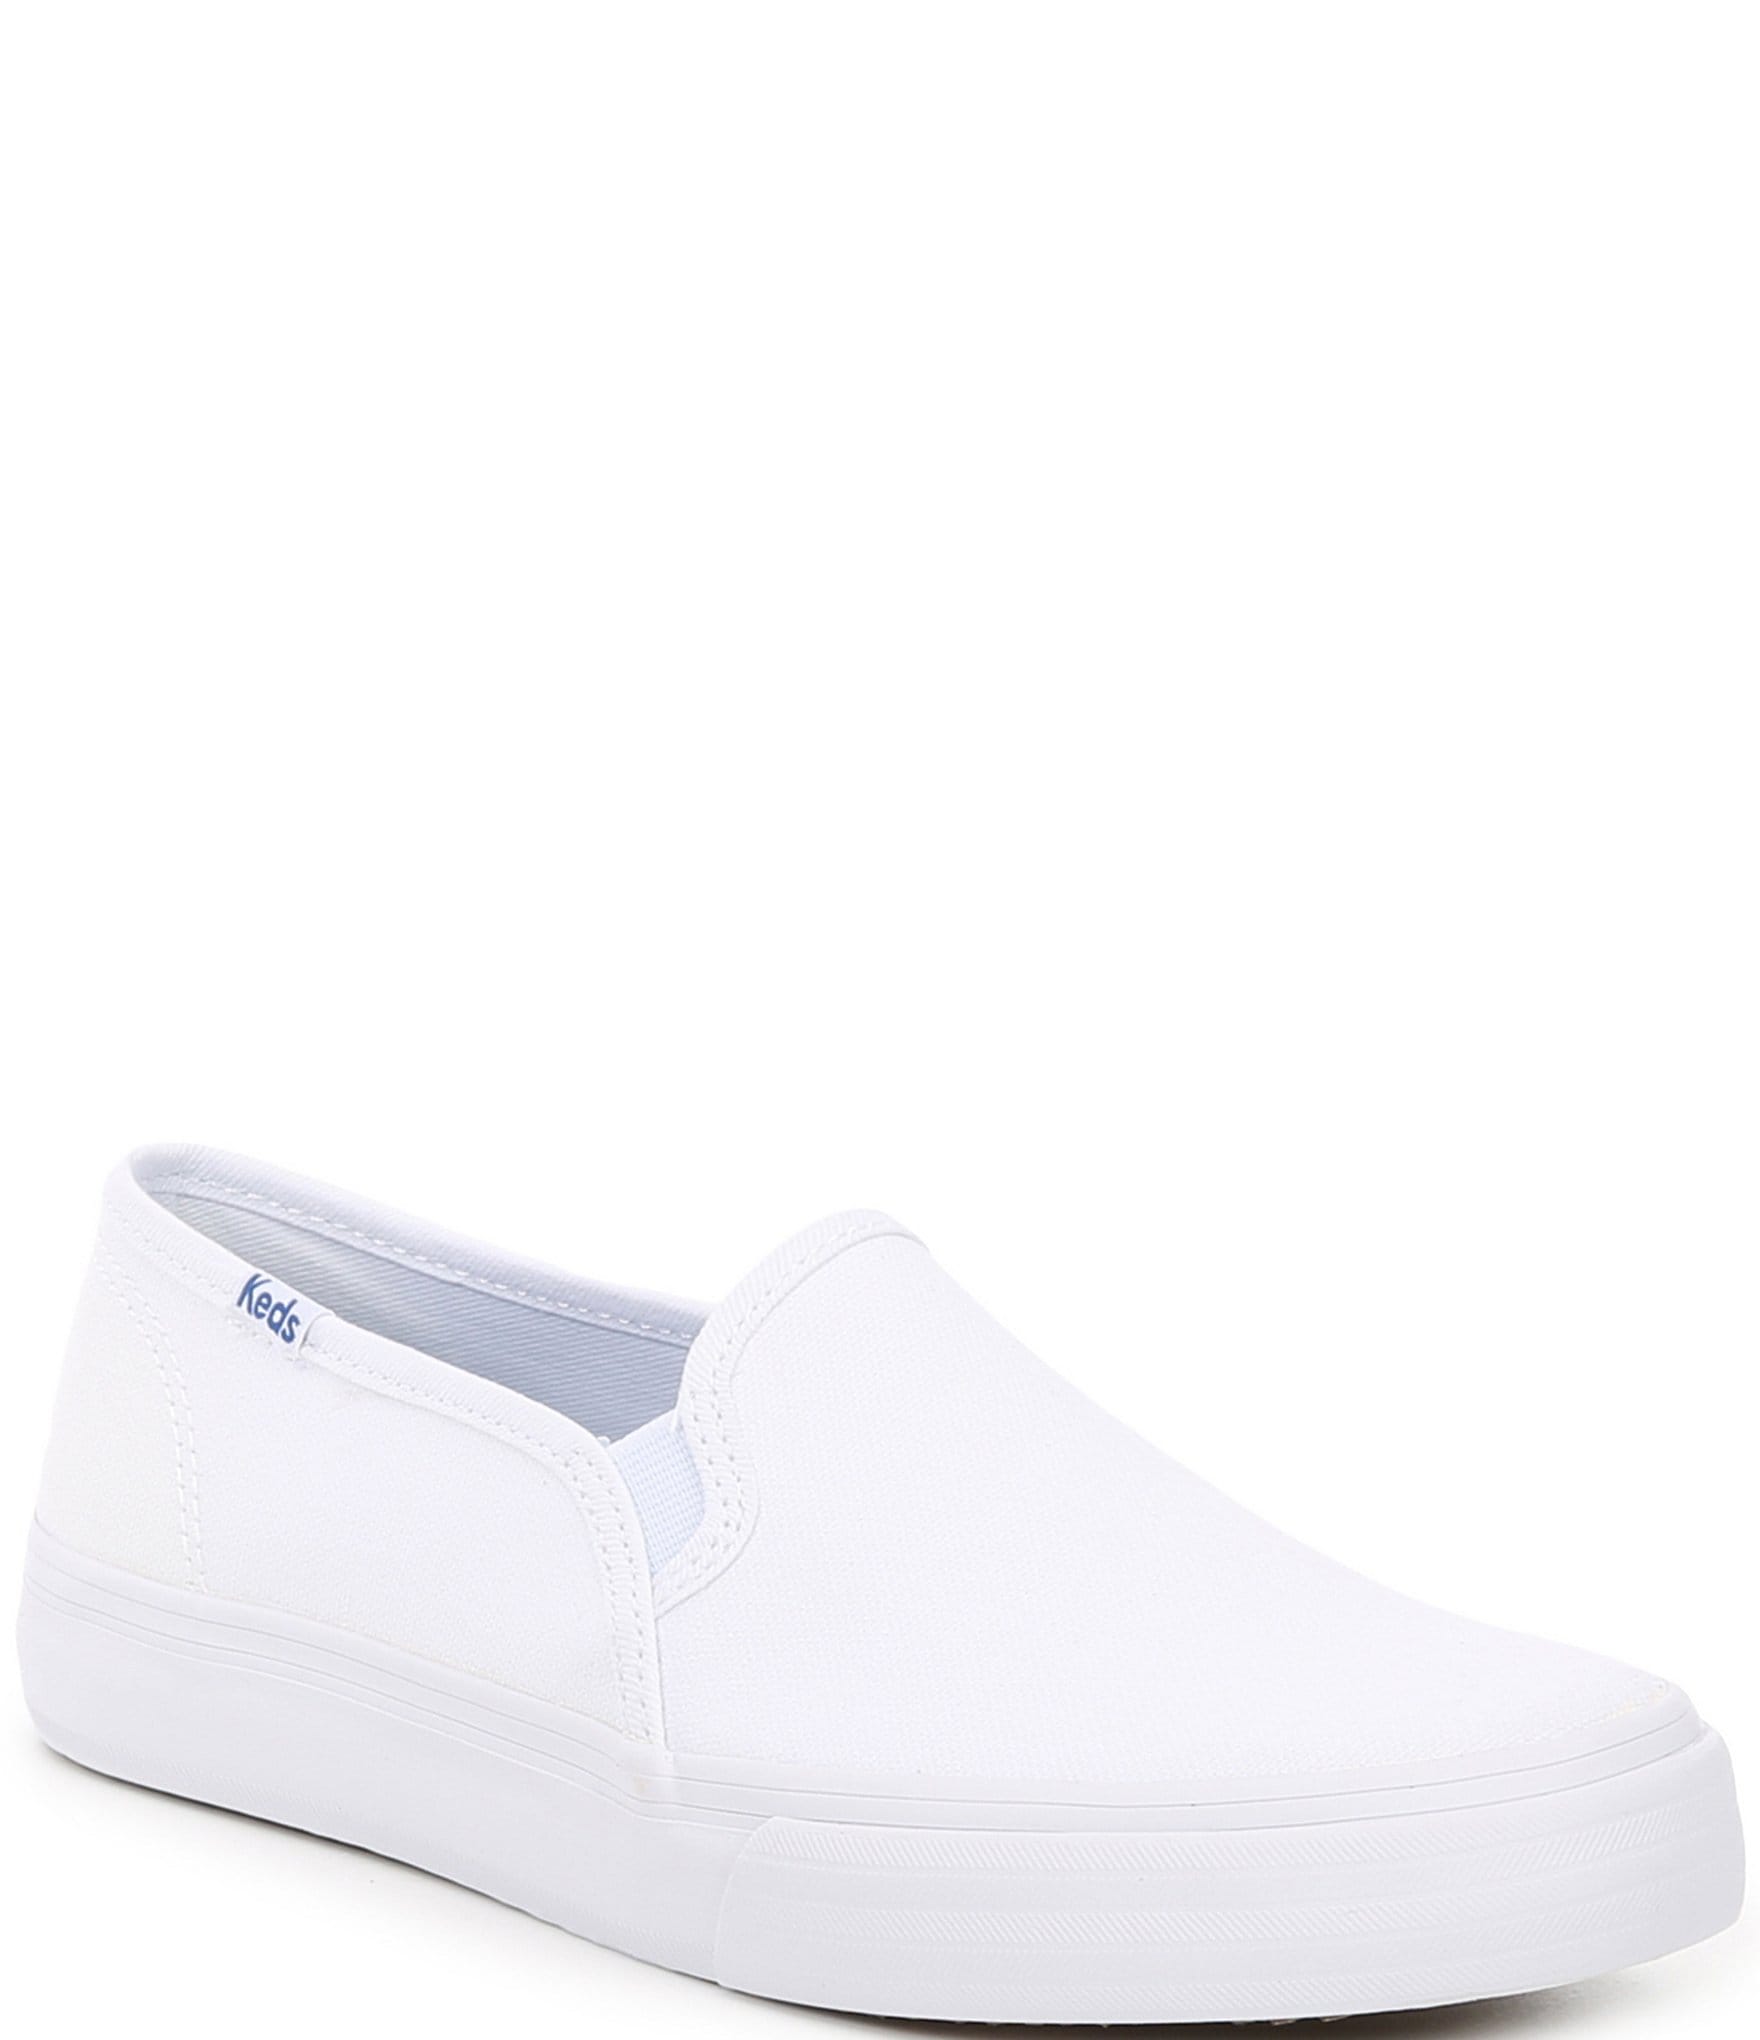 Keds White Canvas Slip On Shoes | vlr.eng.br